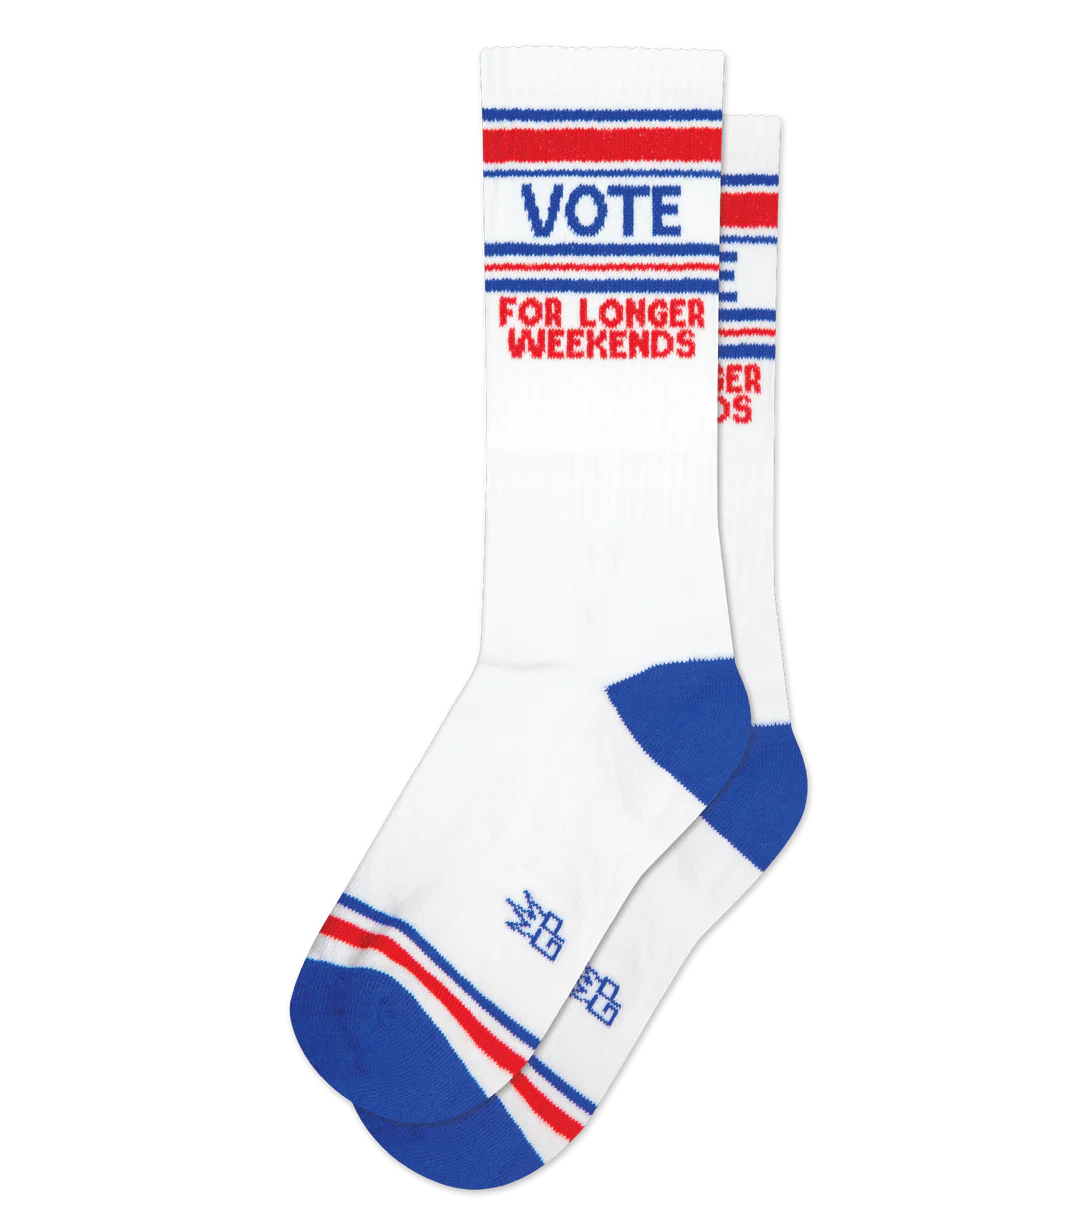 Gumball Poodle Socks: Vote… For Longer Weekends